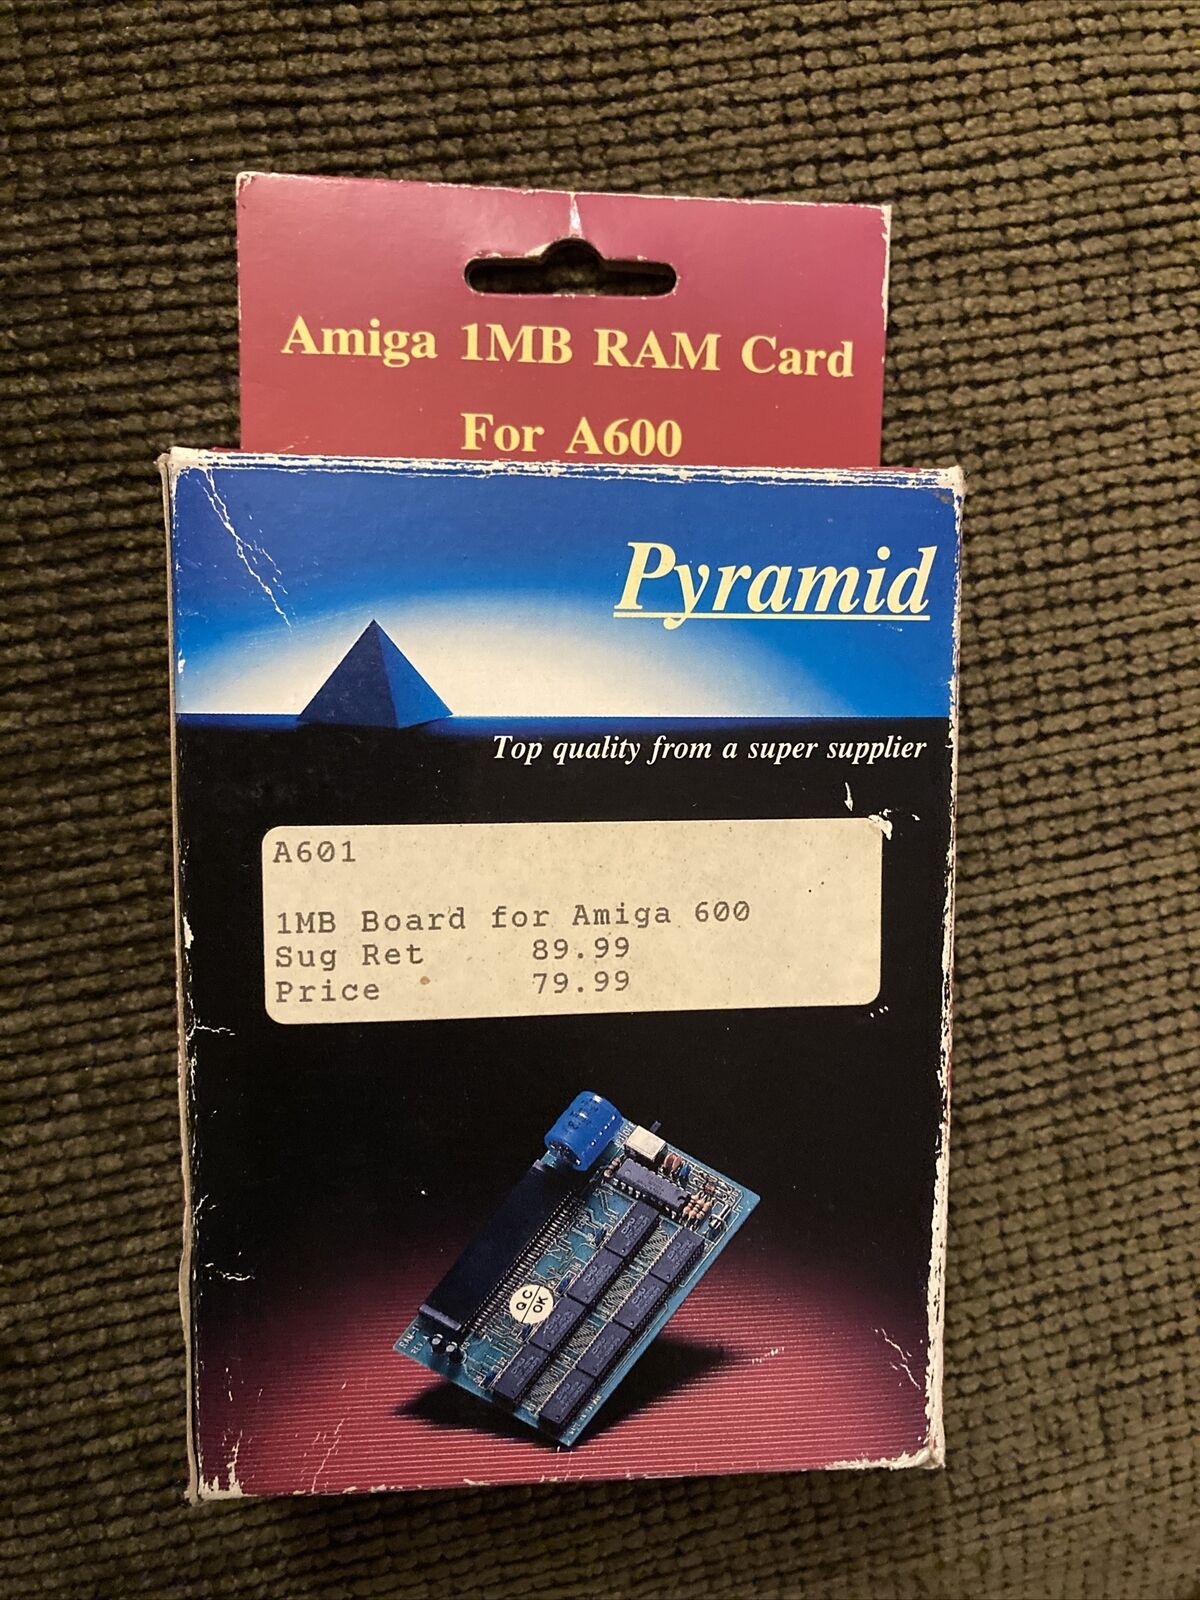 Amiga 1MB RAM Card for A600 - Pyramid